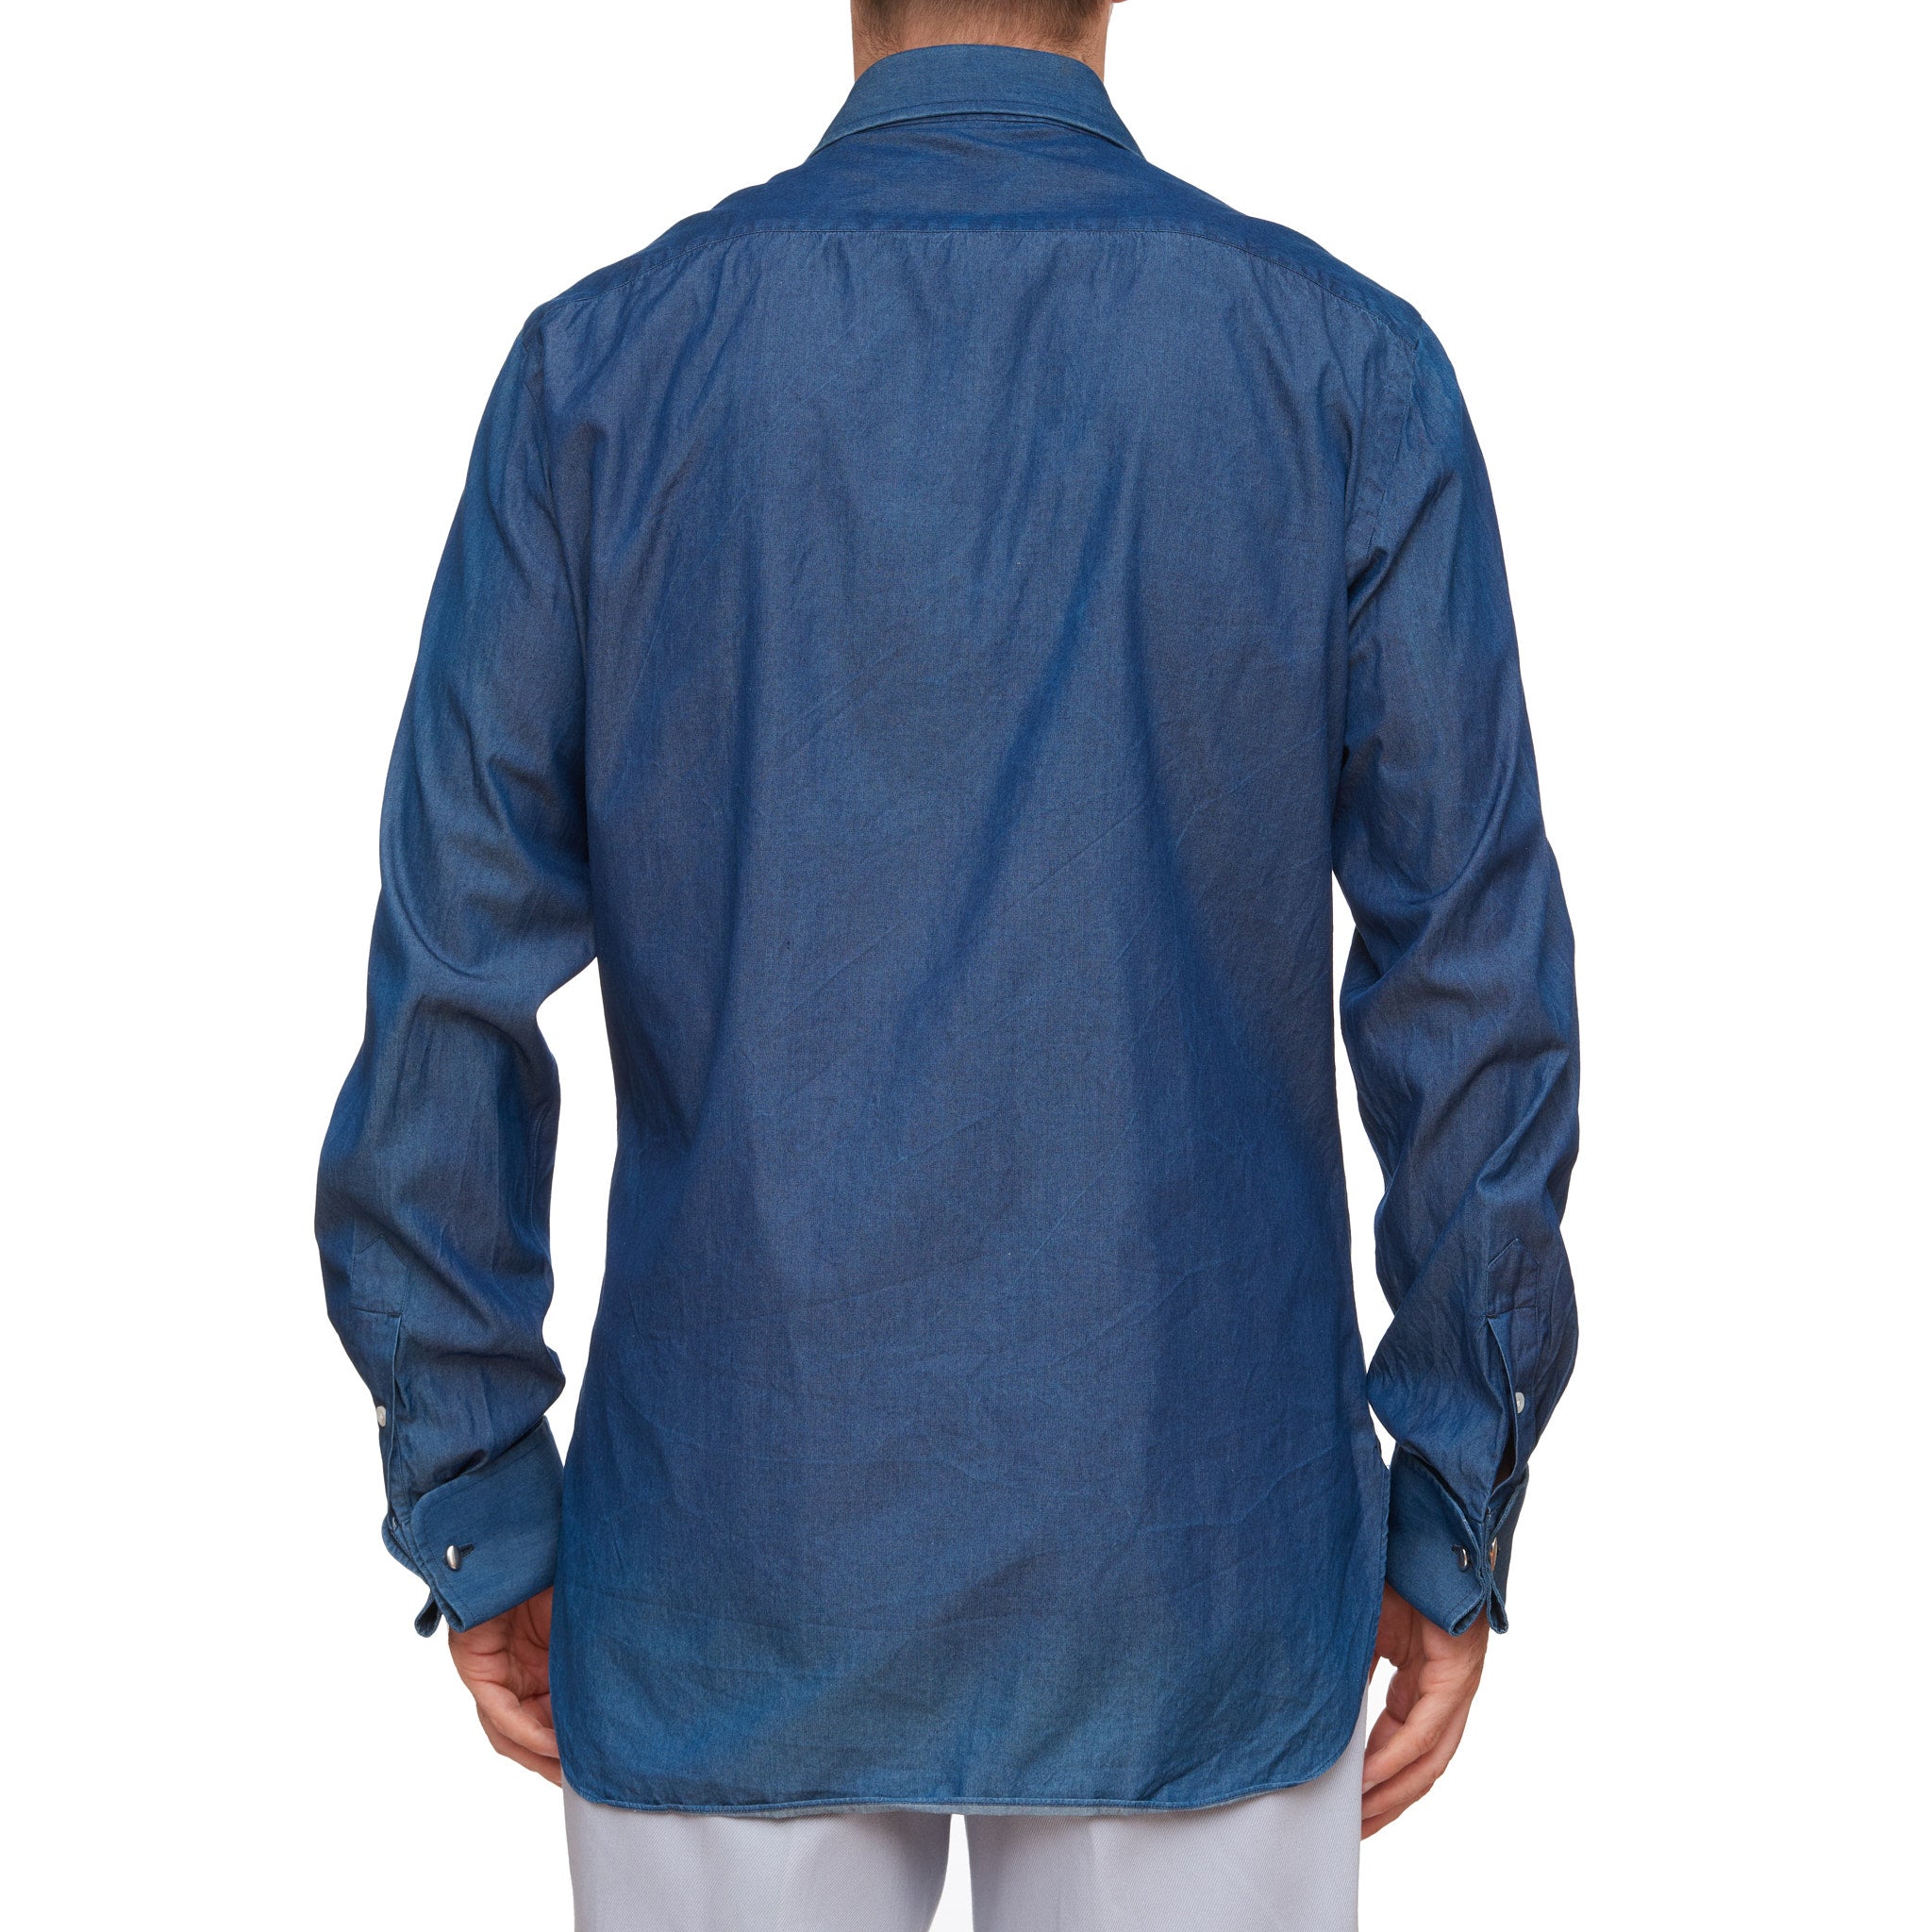 Sartoria CHIAIA Napoli Handmade Blue Cotton Denim French Cuff Shirt EU 43 US 17 Slim SARTORIA CHIAIA